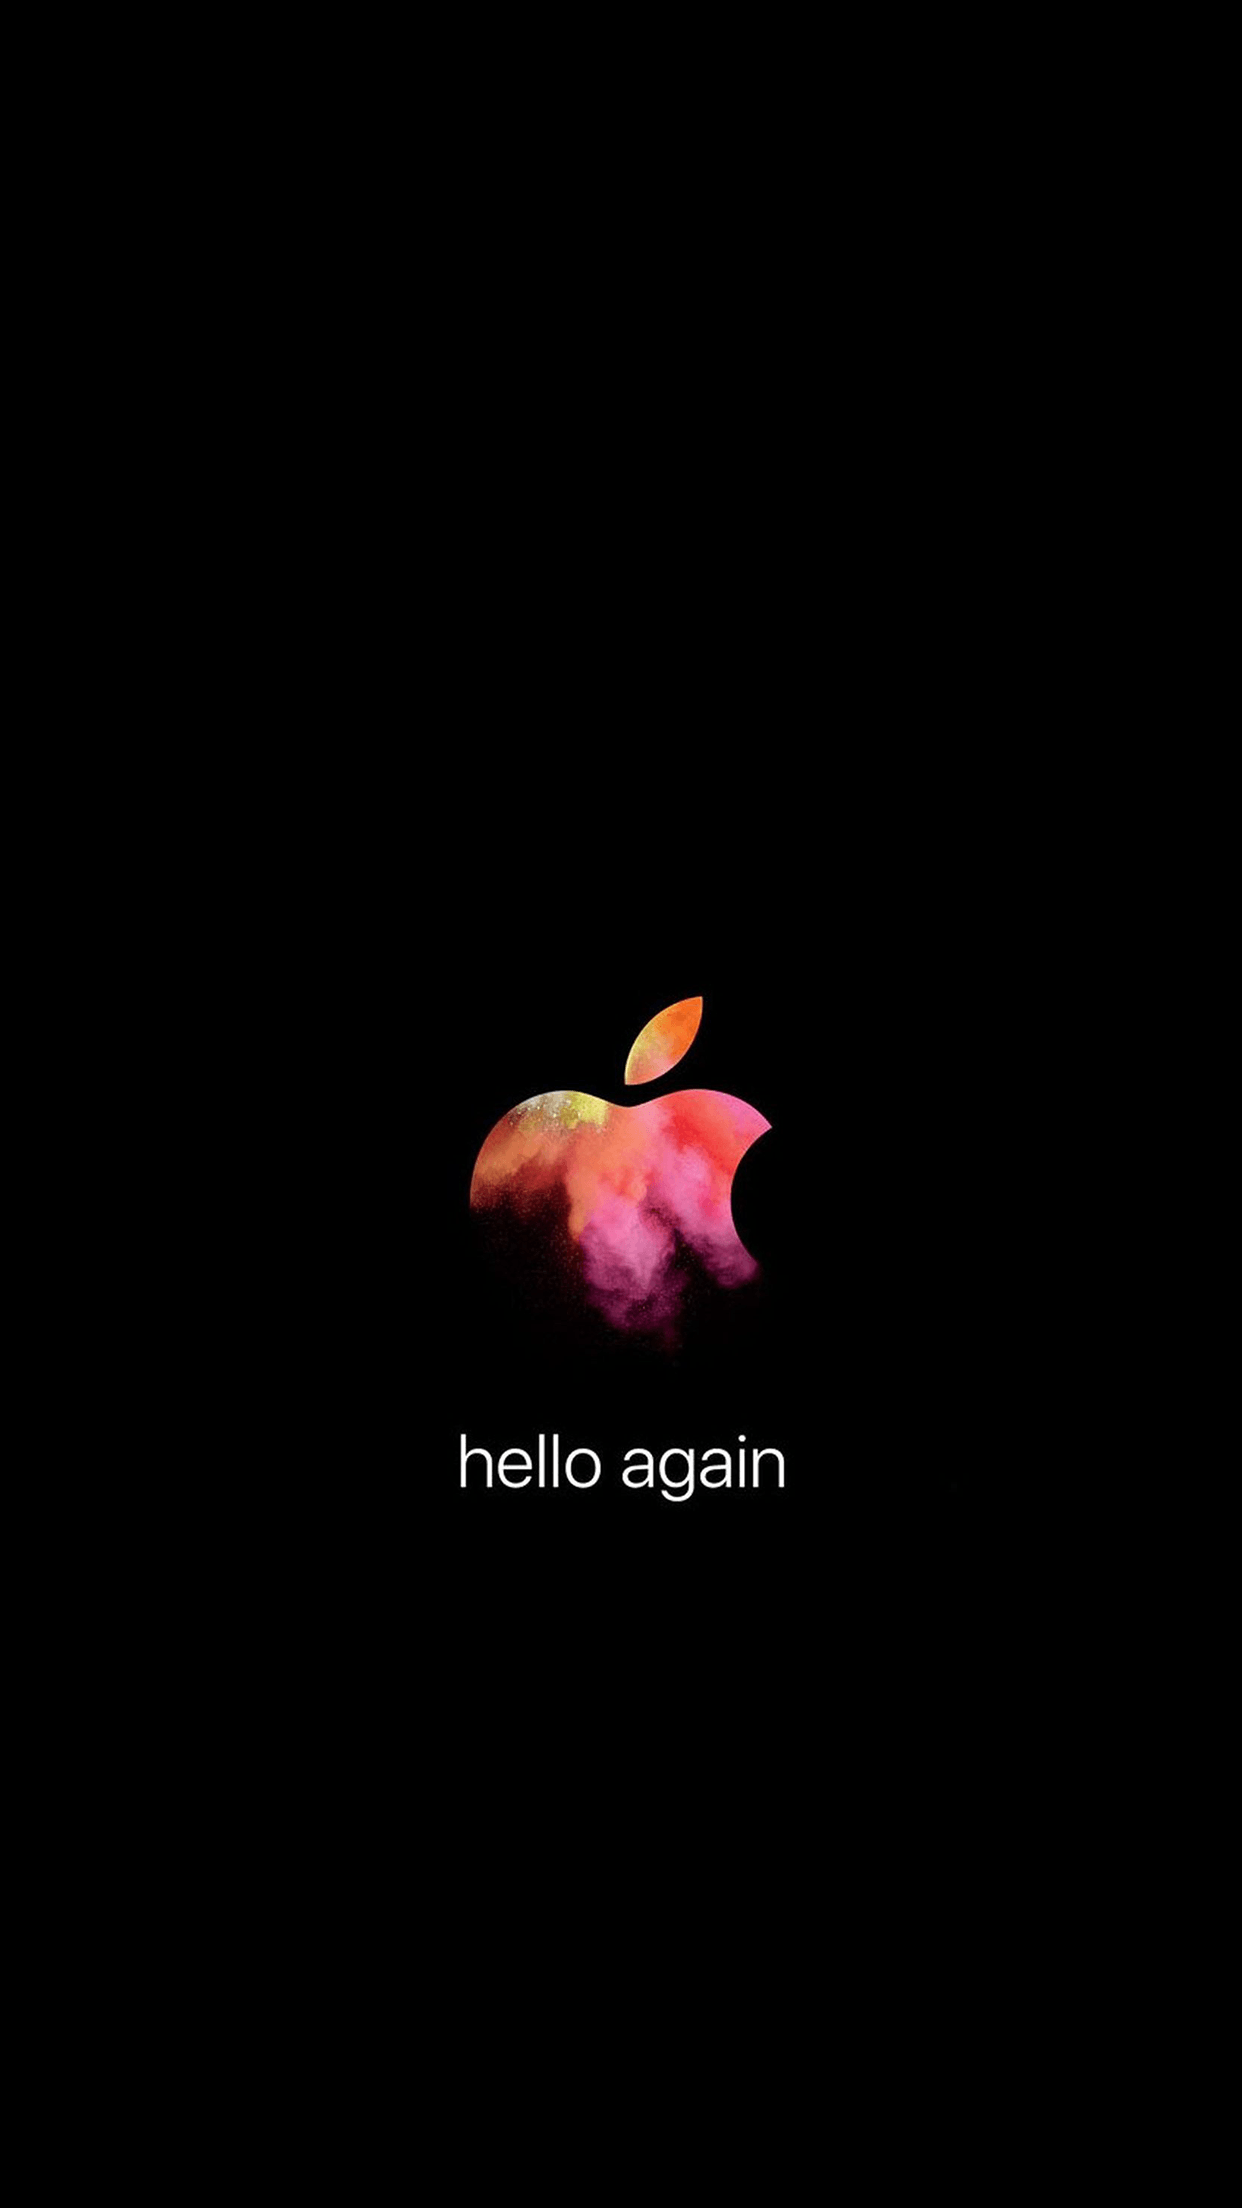 Apple October 27 event wallpaper: hello again